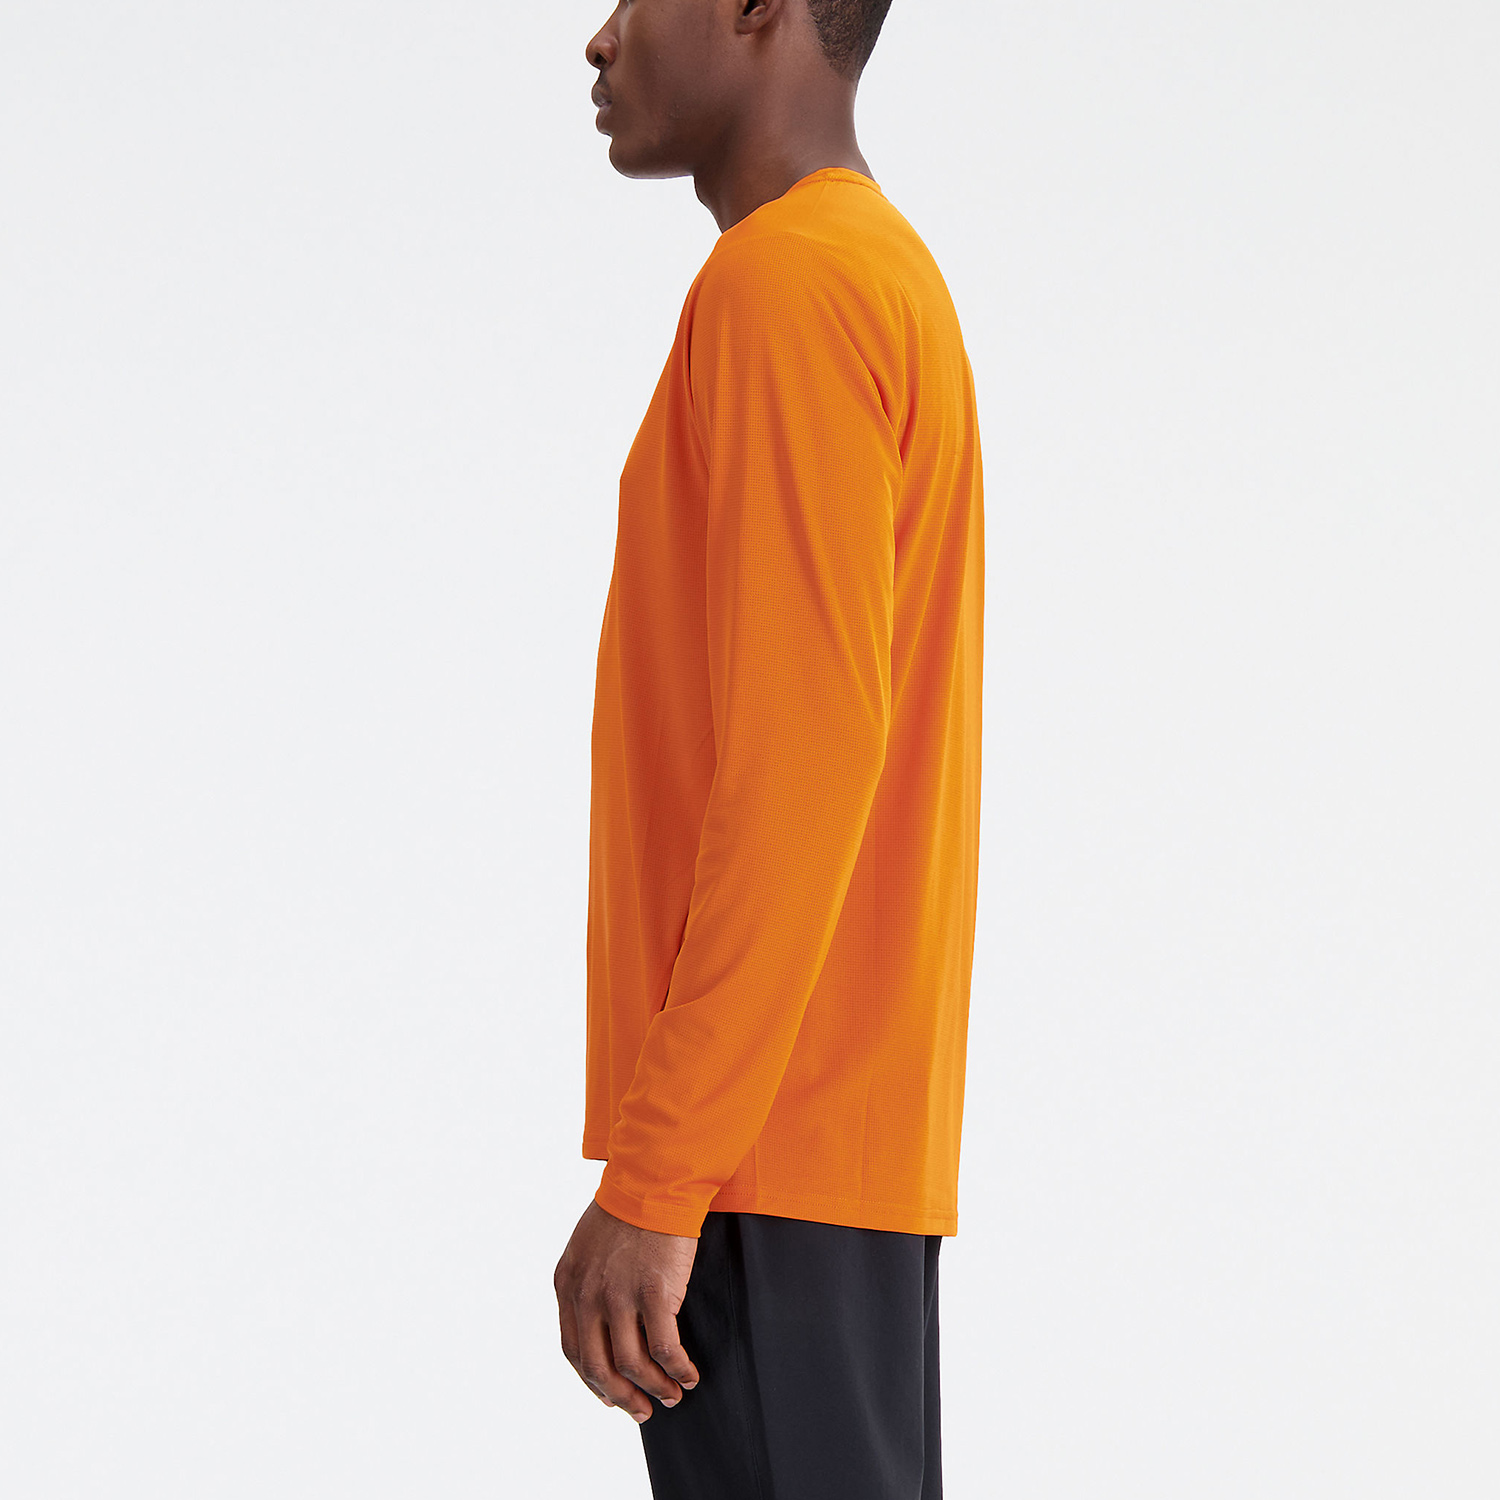 New Balance Accelerate Camisa - Cayenne